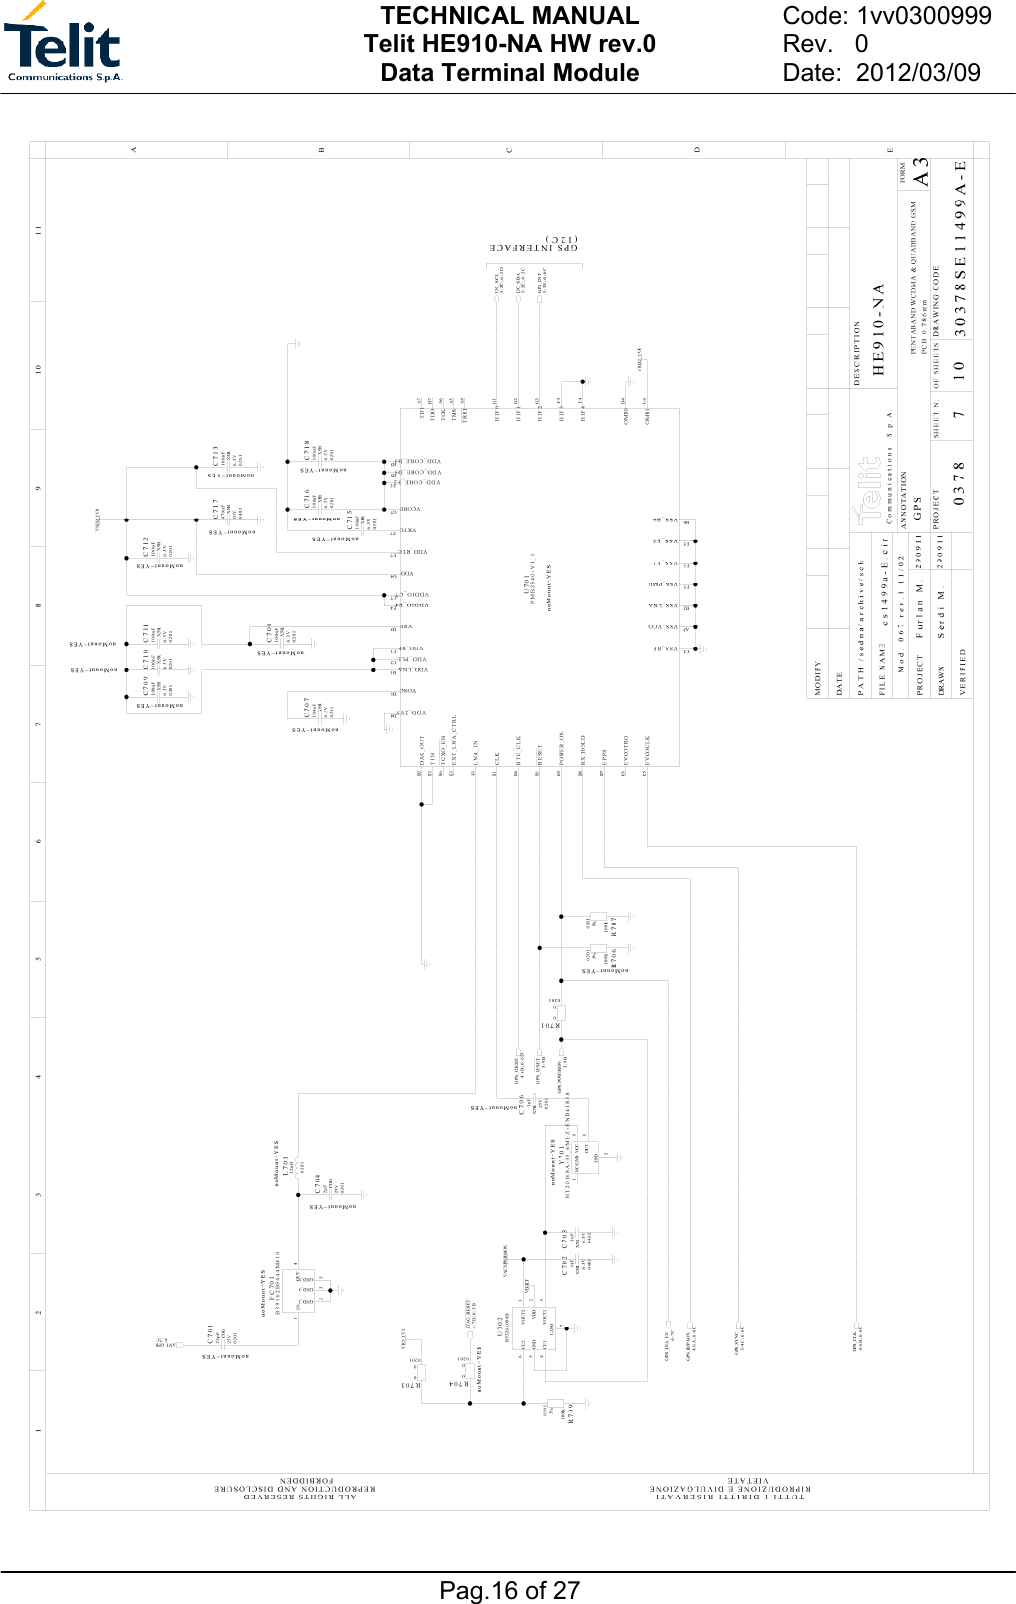 TECHNICAL MANUAL Telit HE910-NA HW rev.0 Data Terminal Module   Pag.16 of 27 Code: 1vv0300999    Rev.   0  Date:  2012/03/09  